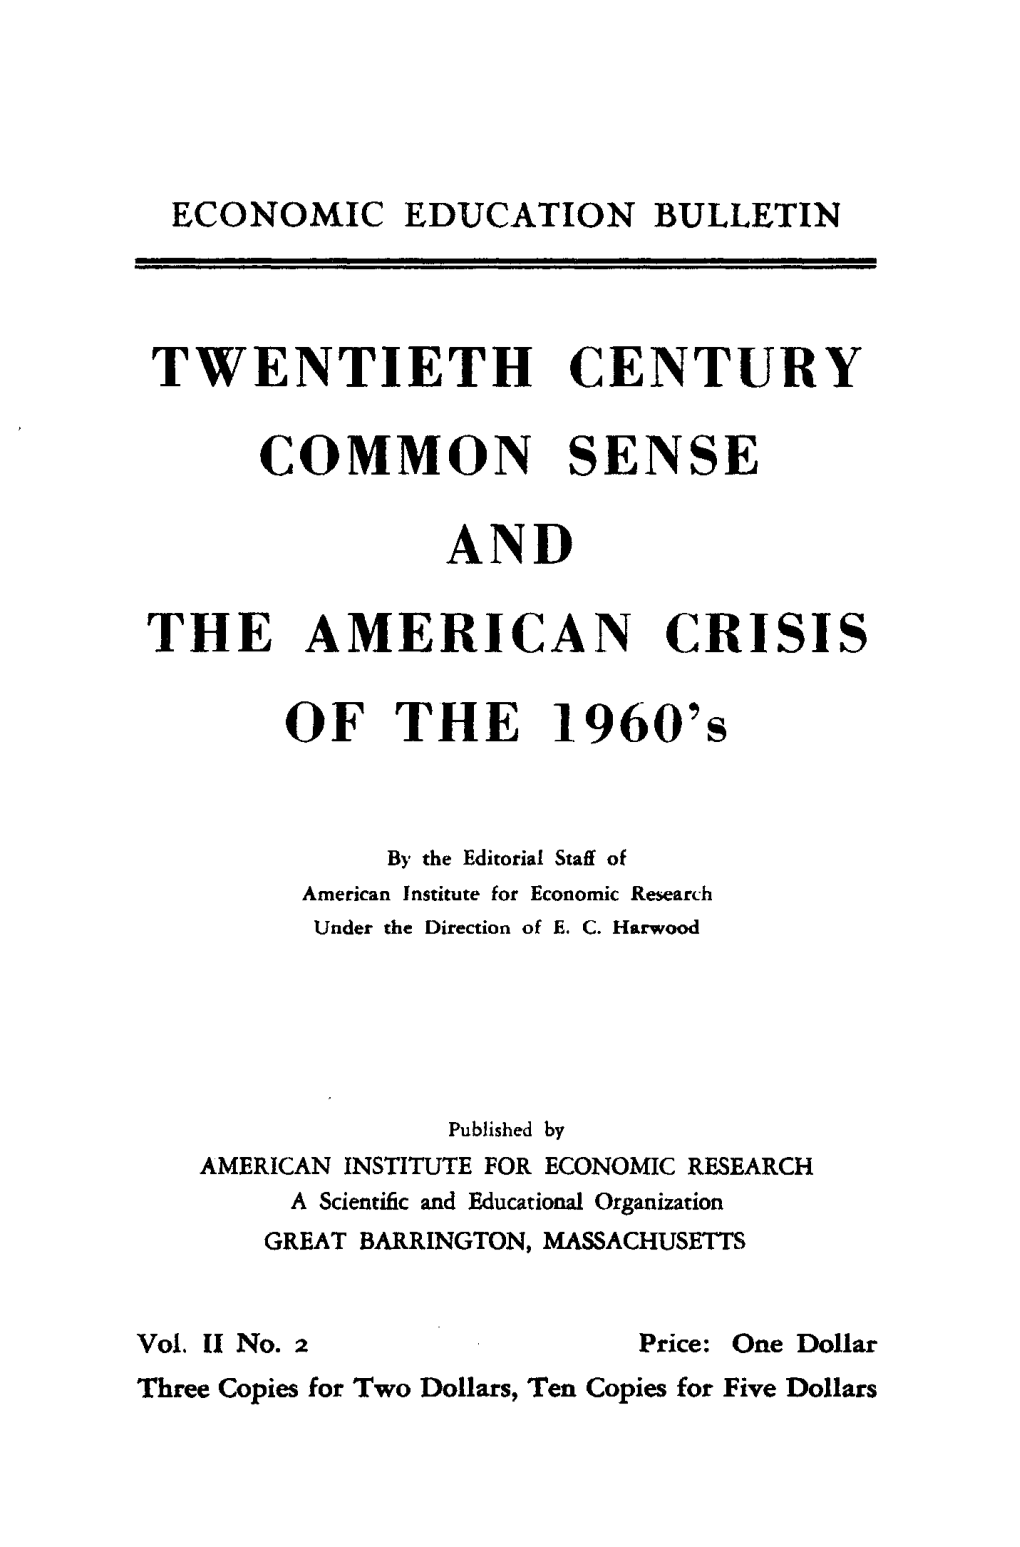 TWENTIETH CENTURY COMMON SENSE and the AMERICAN CRISIS of the 1960S